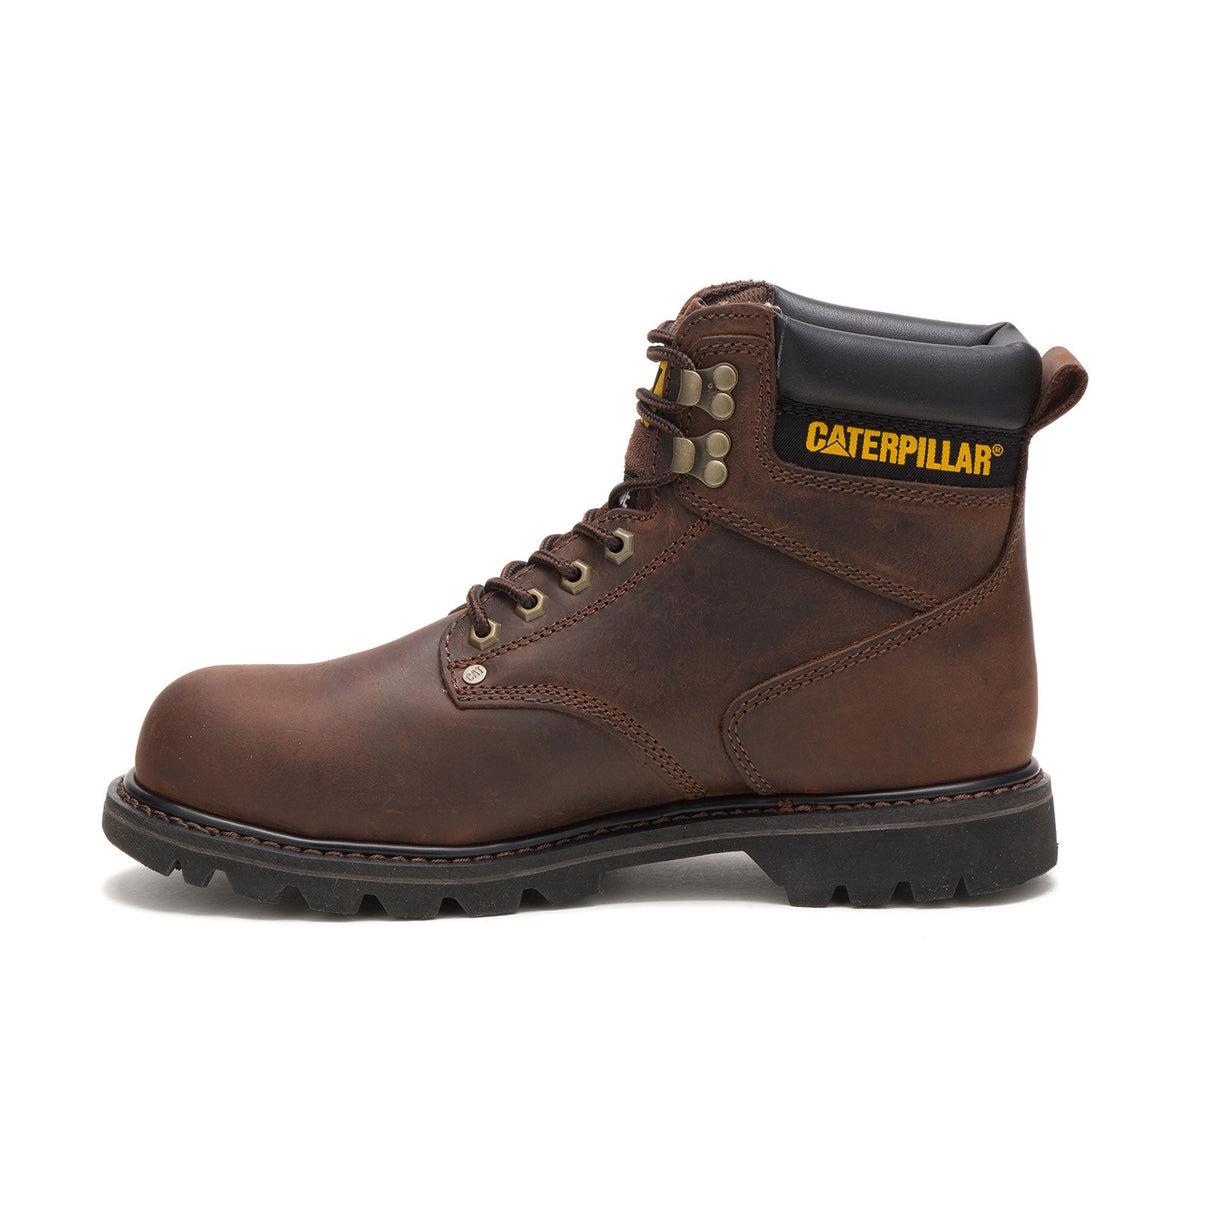 Caterpillar Second Shift Men's Steel-Toe Work Boots P89586-2